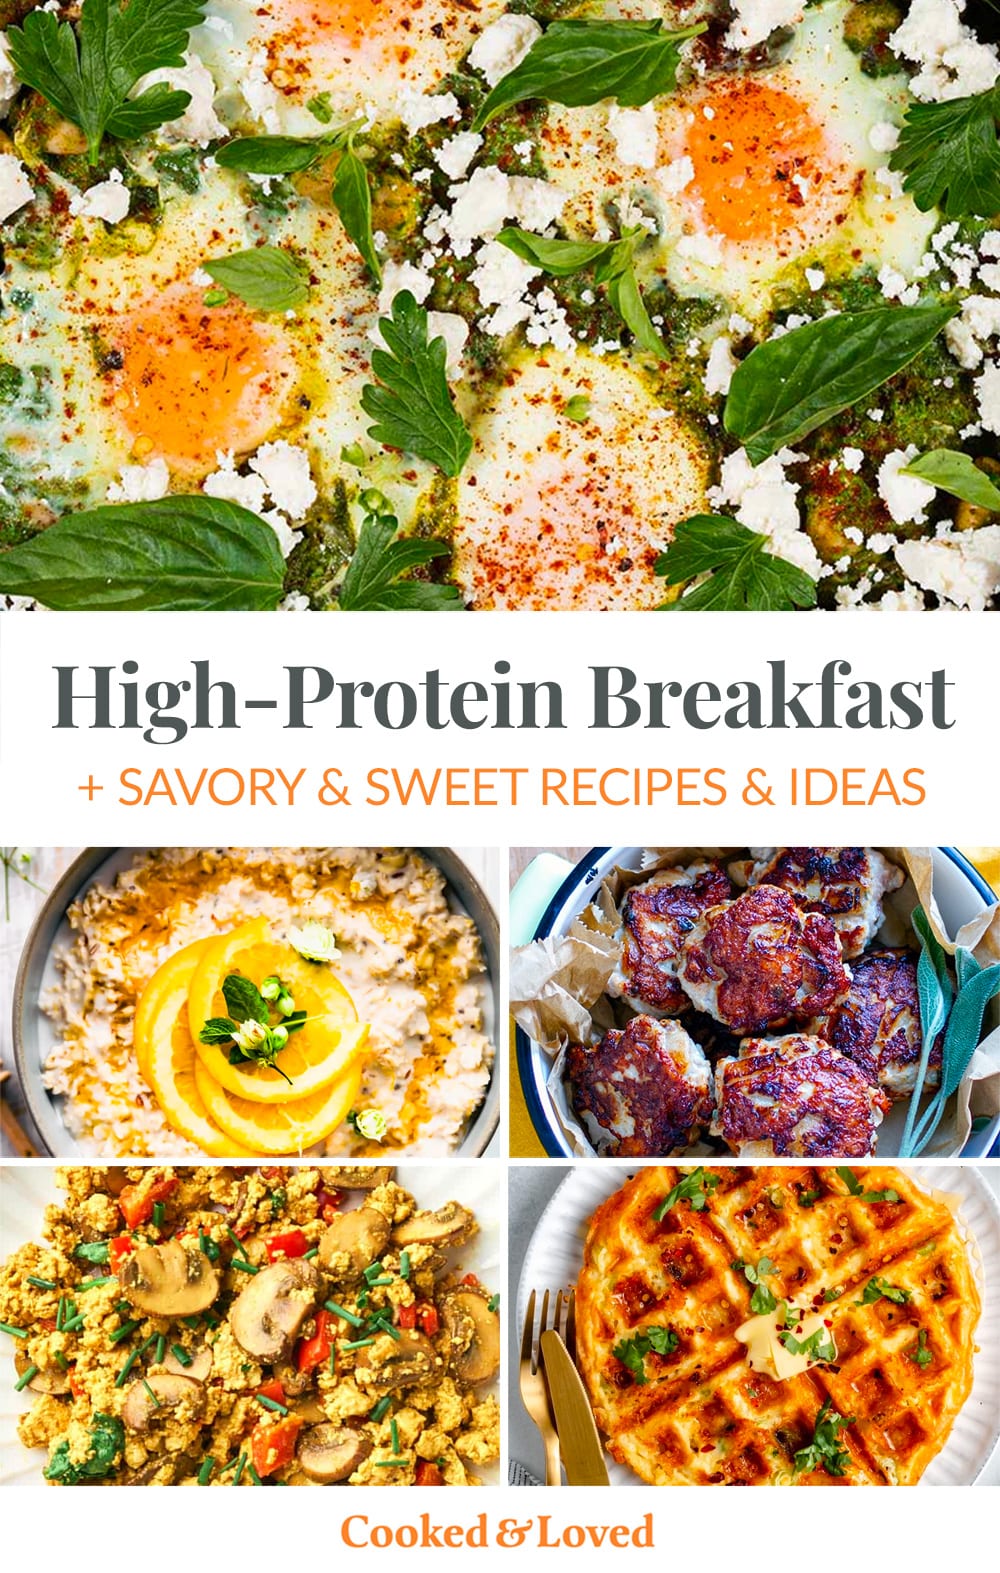 High-Protein Breakfast Ideas & Recipes